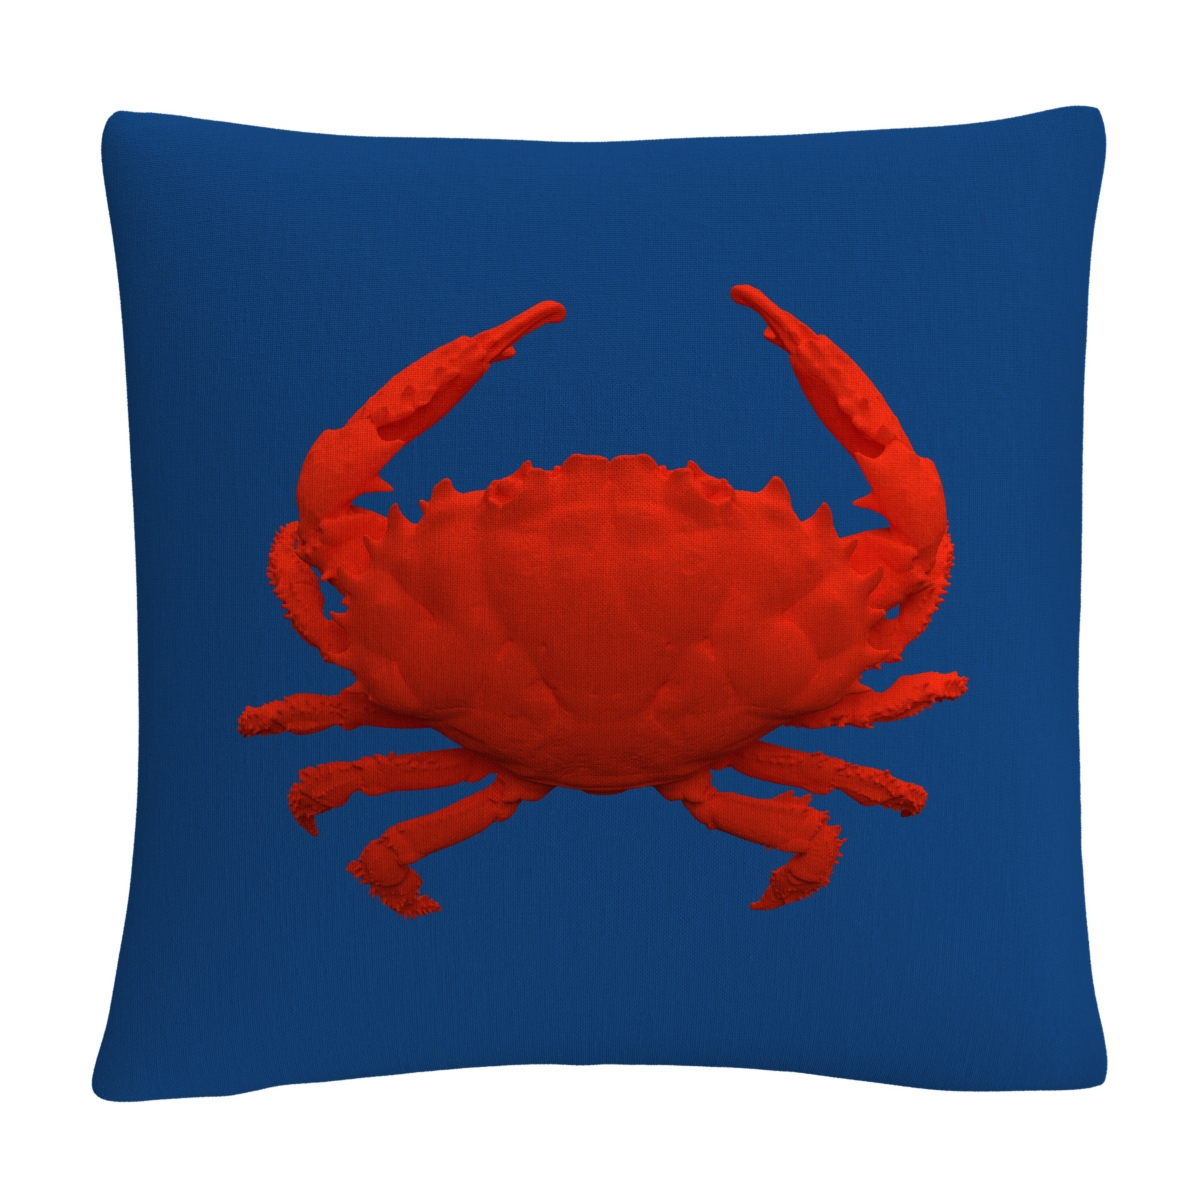 Abc Modern 3D Red Crab Decorative Pillow, 16 x 16